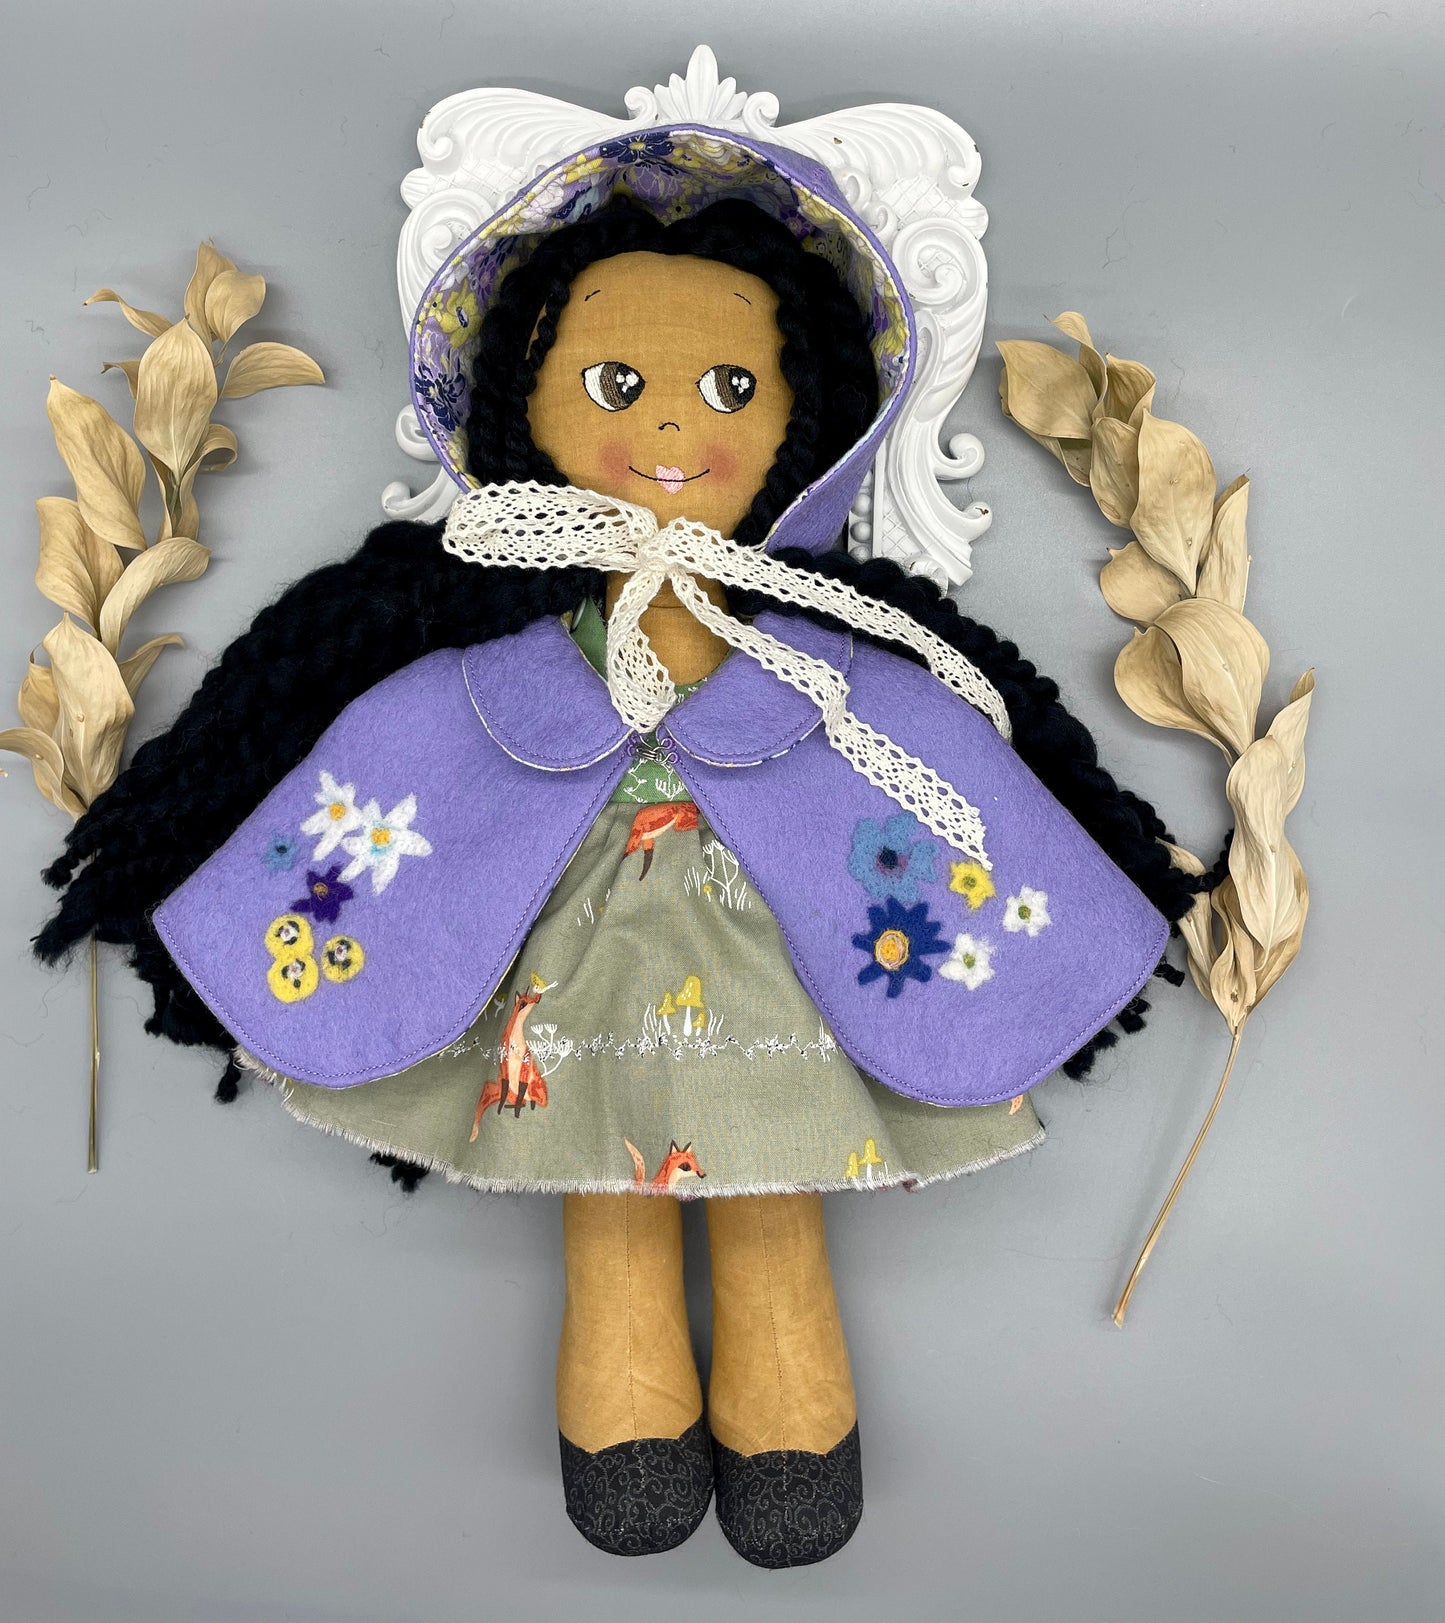 REVERSIBLE DRESS, Handmade Doll, "NOEL", handmade gift, cloth, fabric doll, black doll, diverse doll, heirloom doll, Brown Muslin, holiday